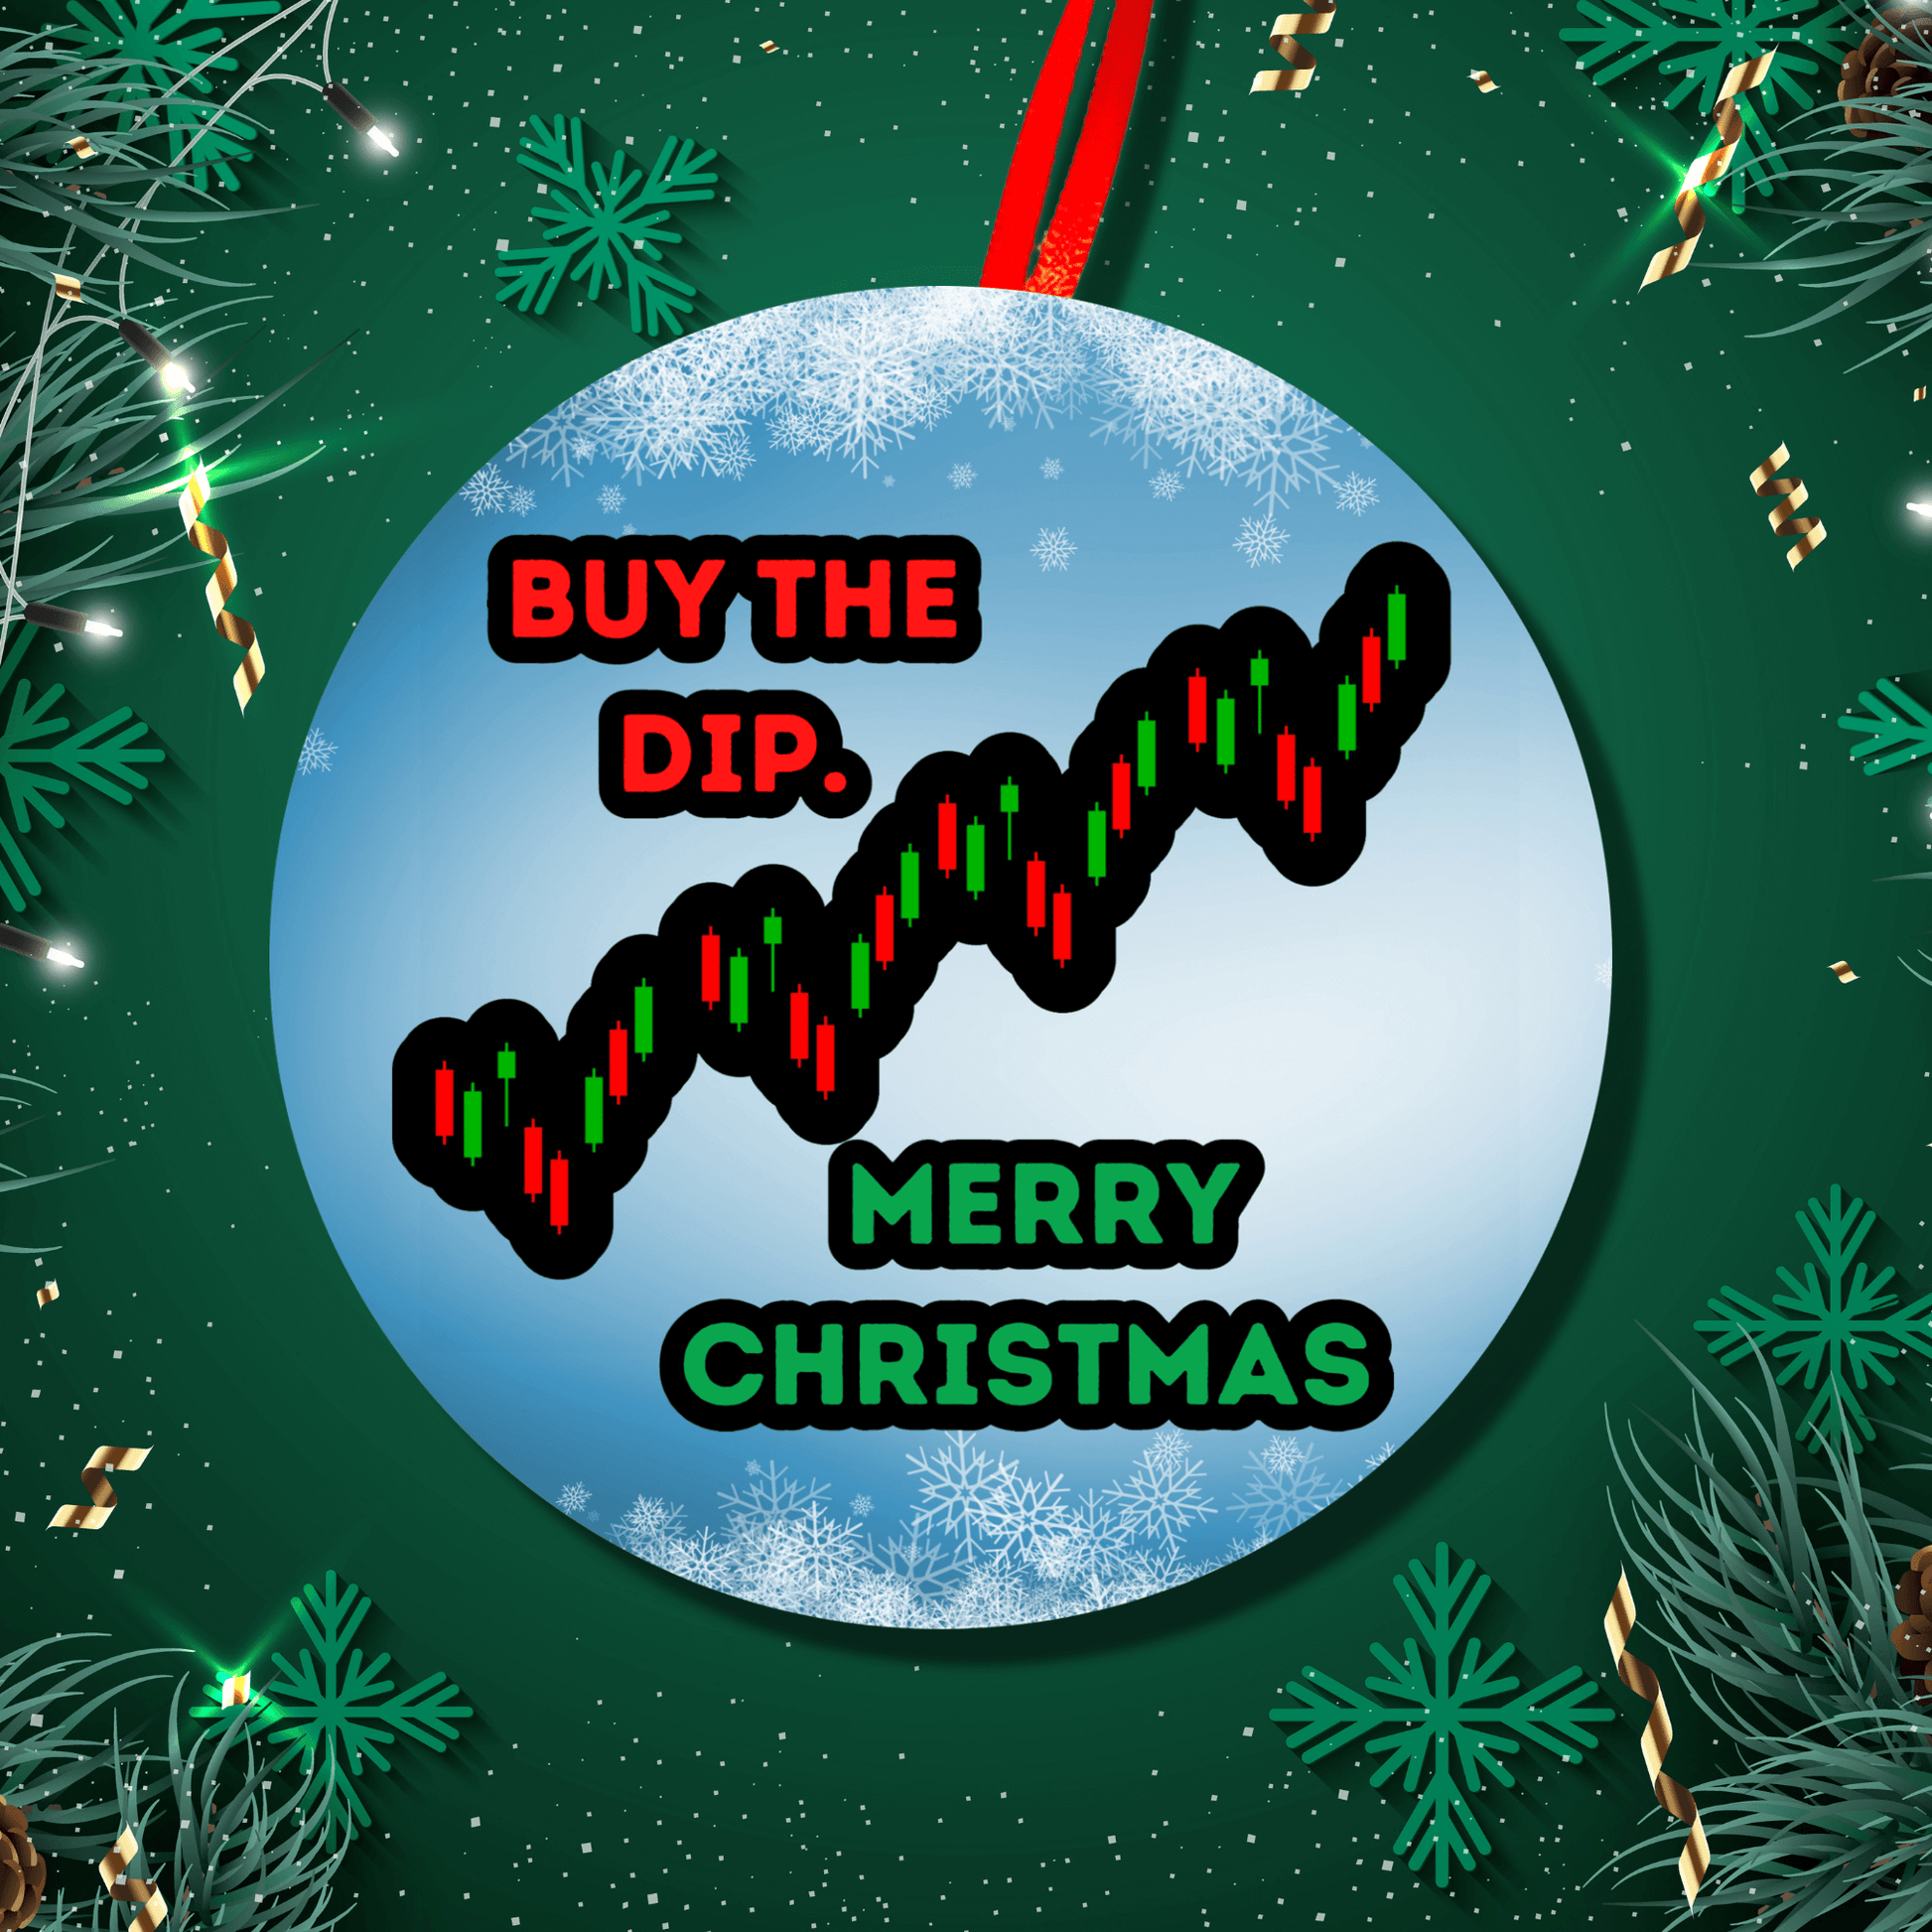 Day Trader Christmas Ornament, Buy The Dip, Stocks, Crypto 9